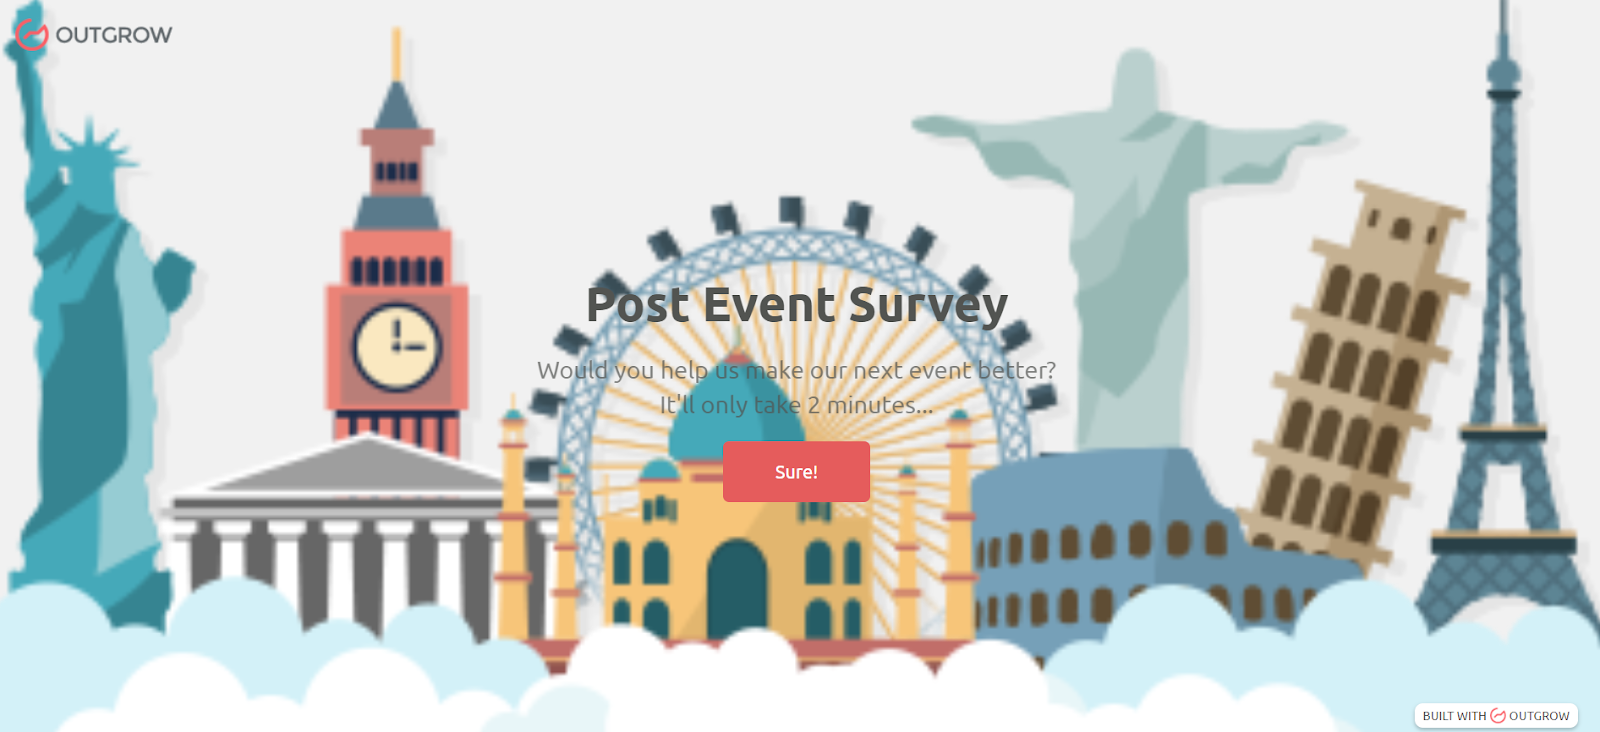 Outgrow's post-event feedback survey